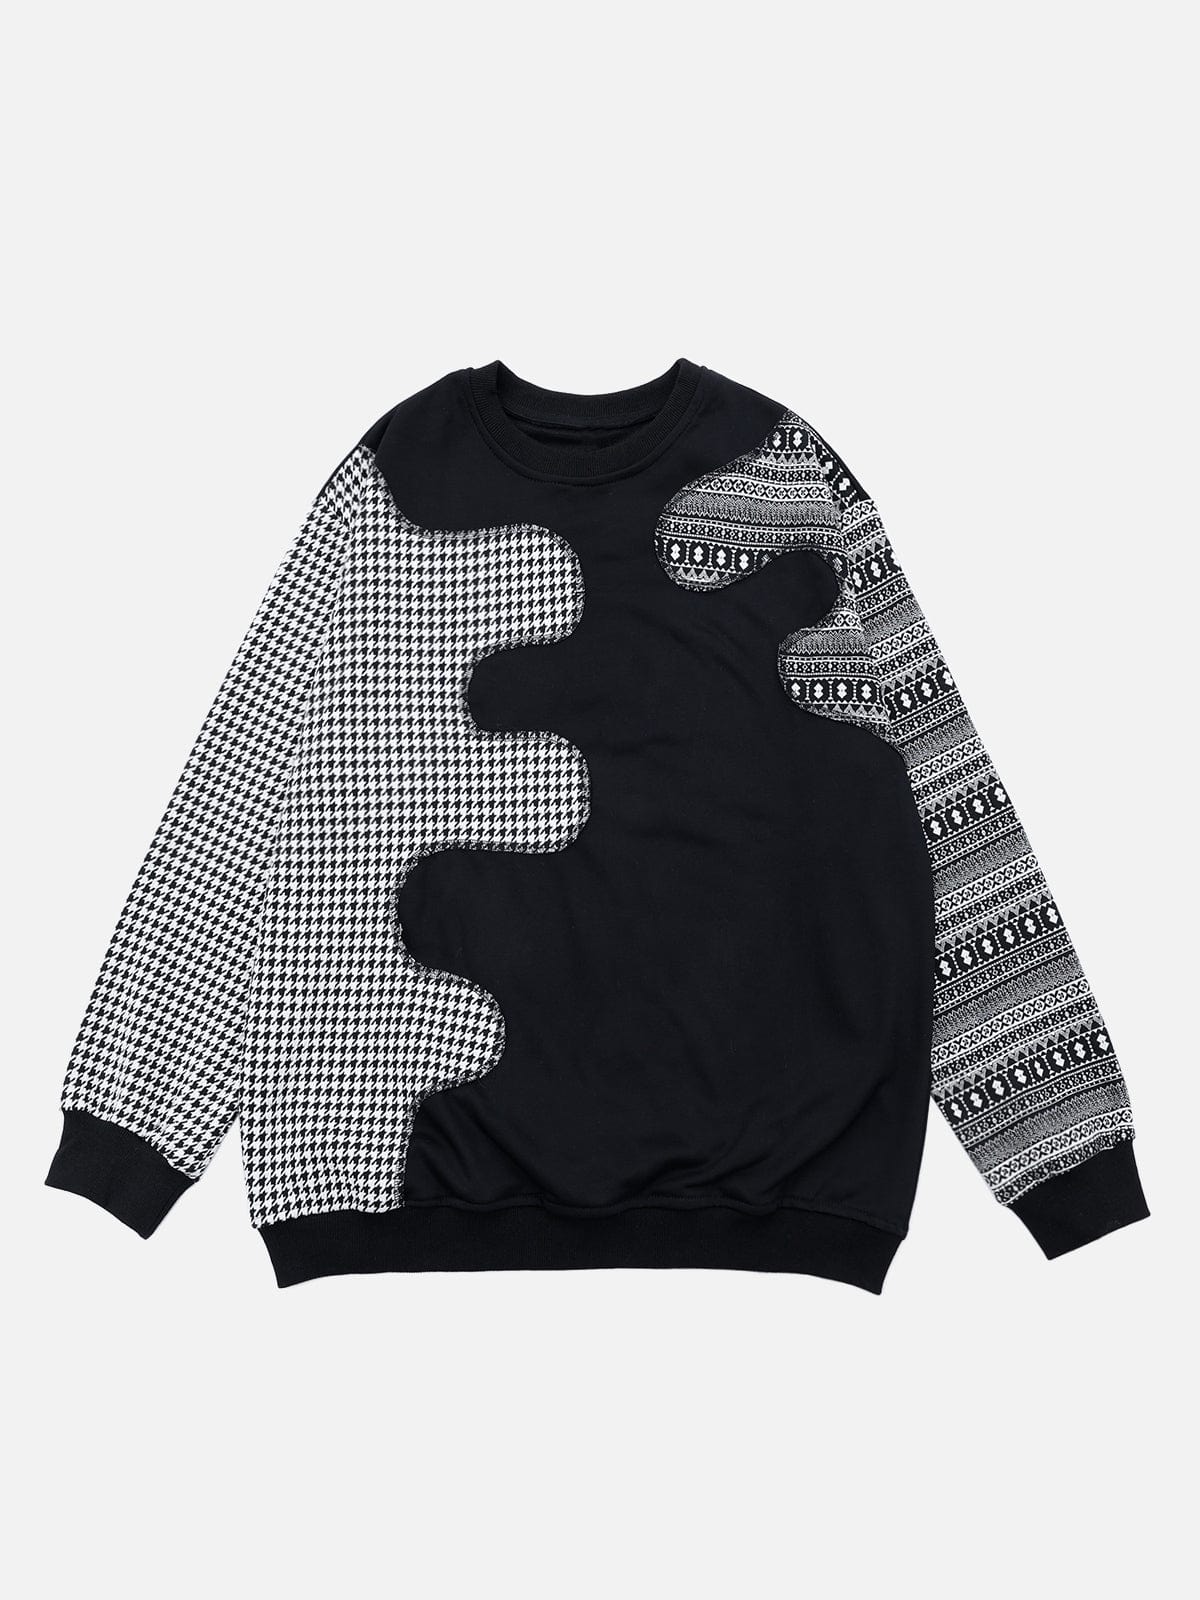 NEV Irregular Material Patchwork Sweatshirt